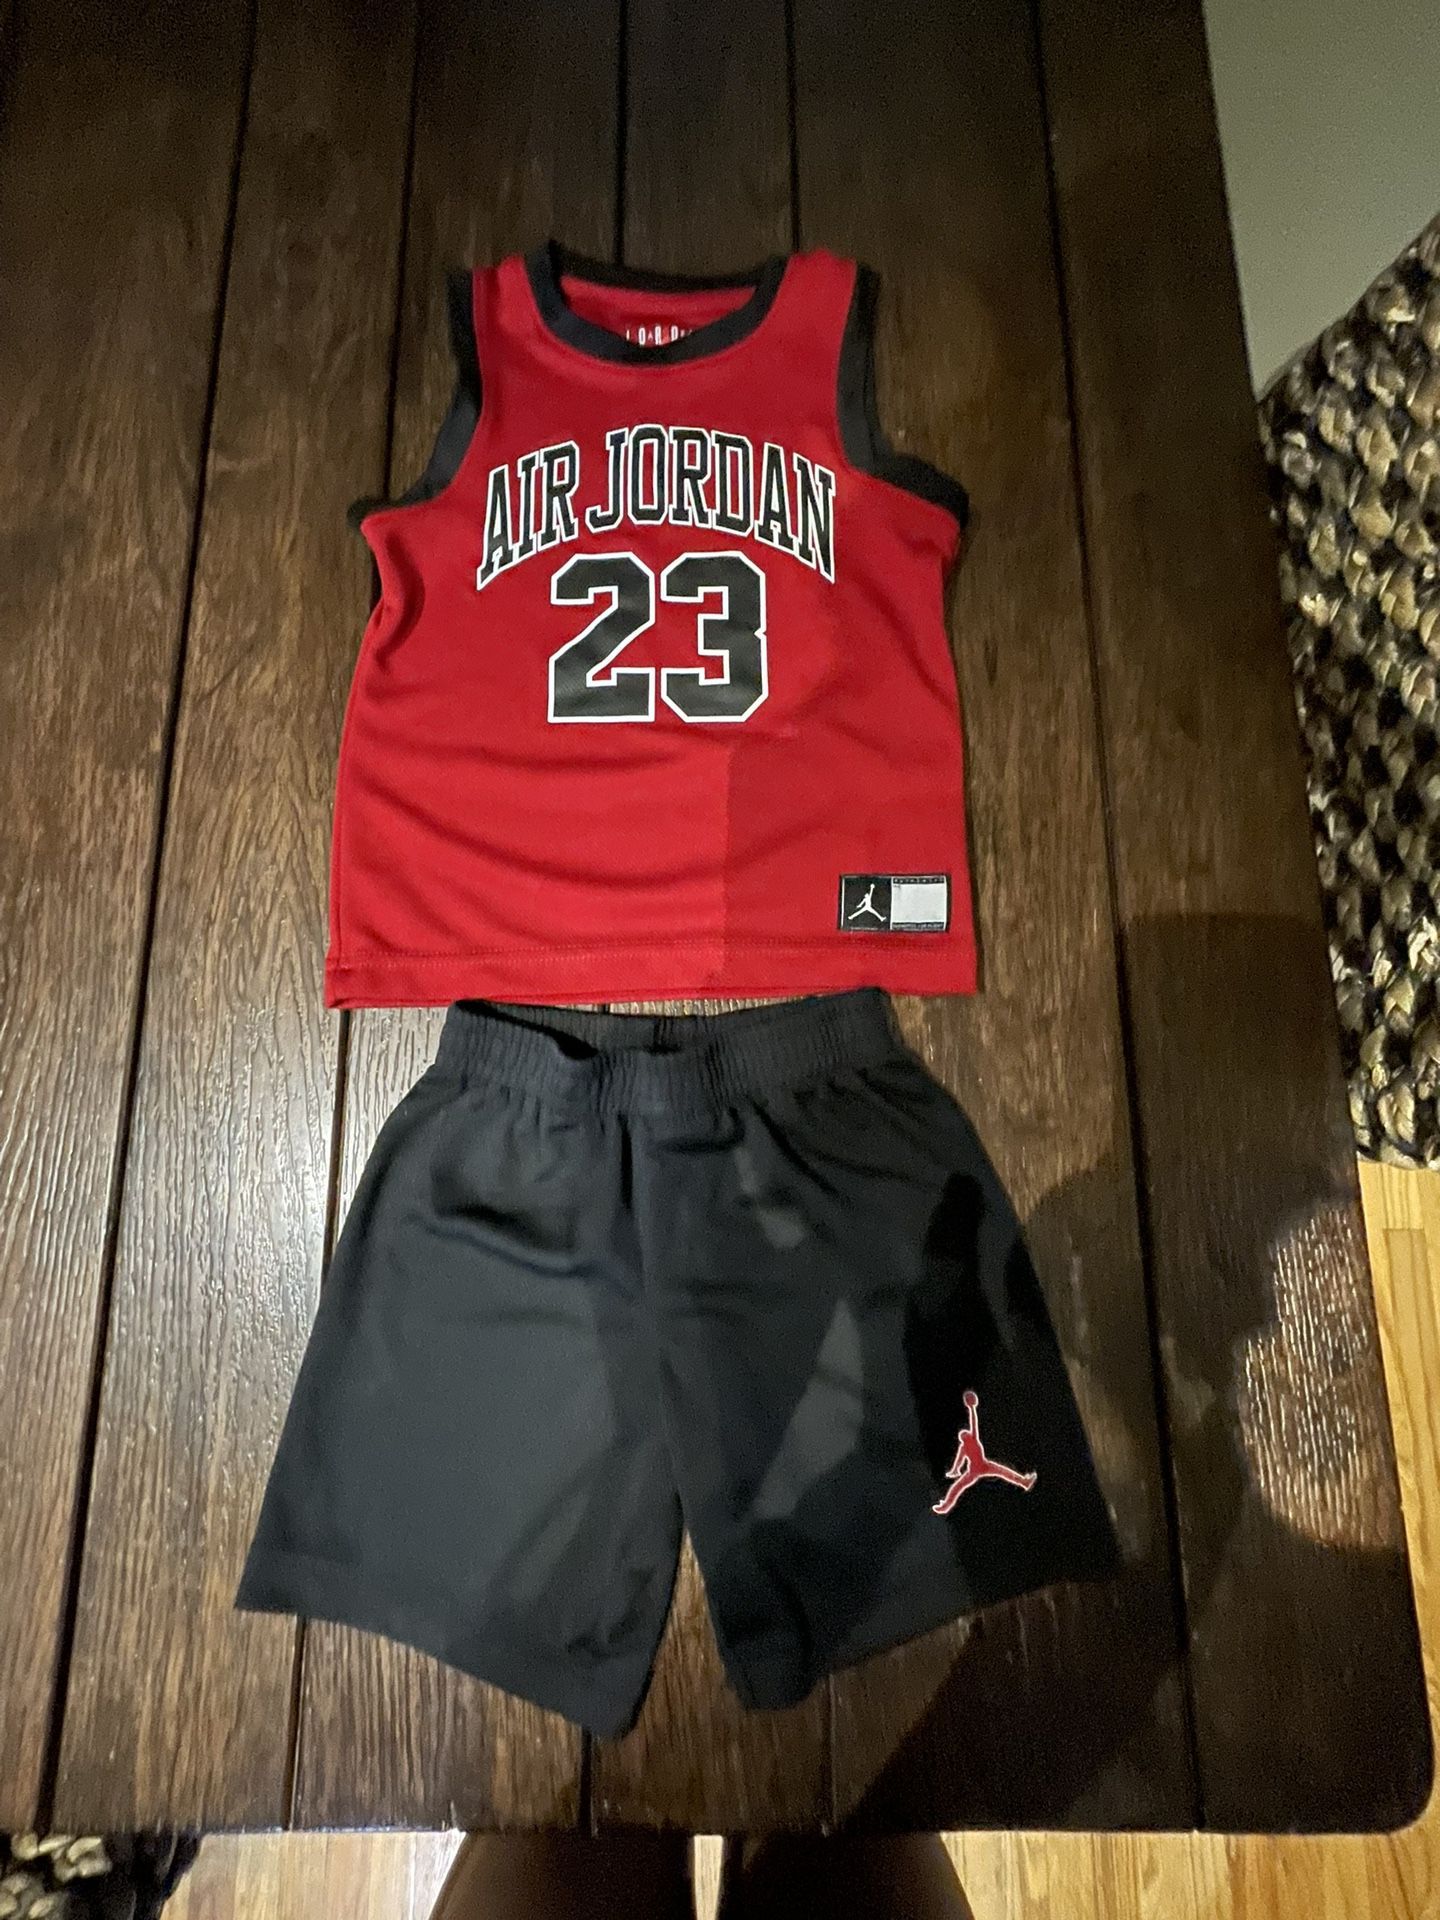 Air Jordan basketball jersey and shorts